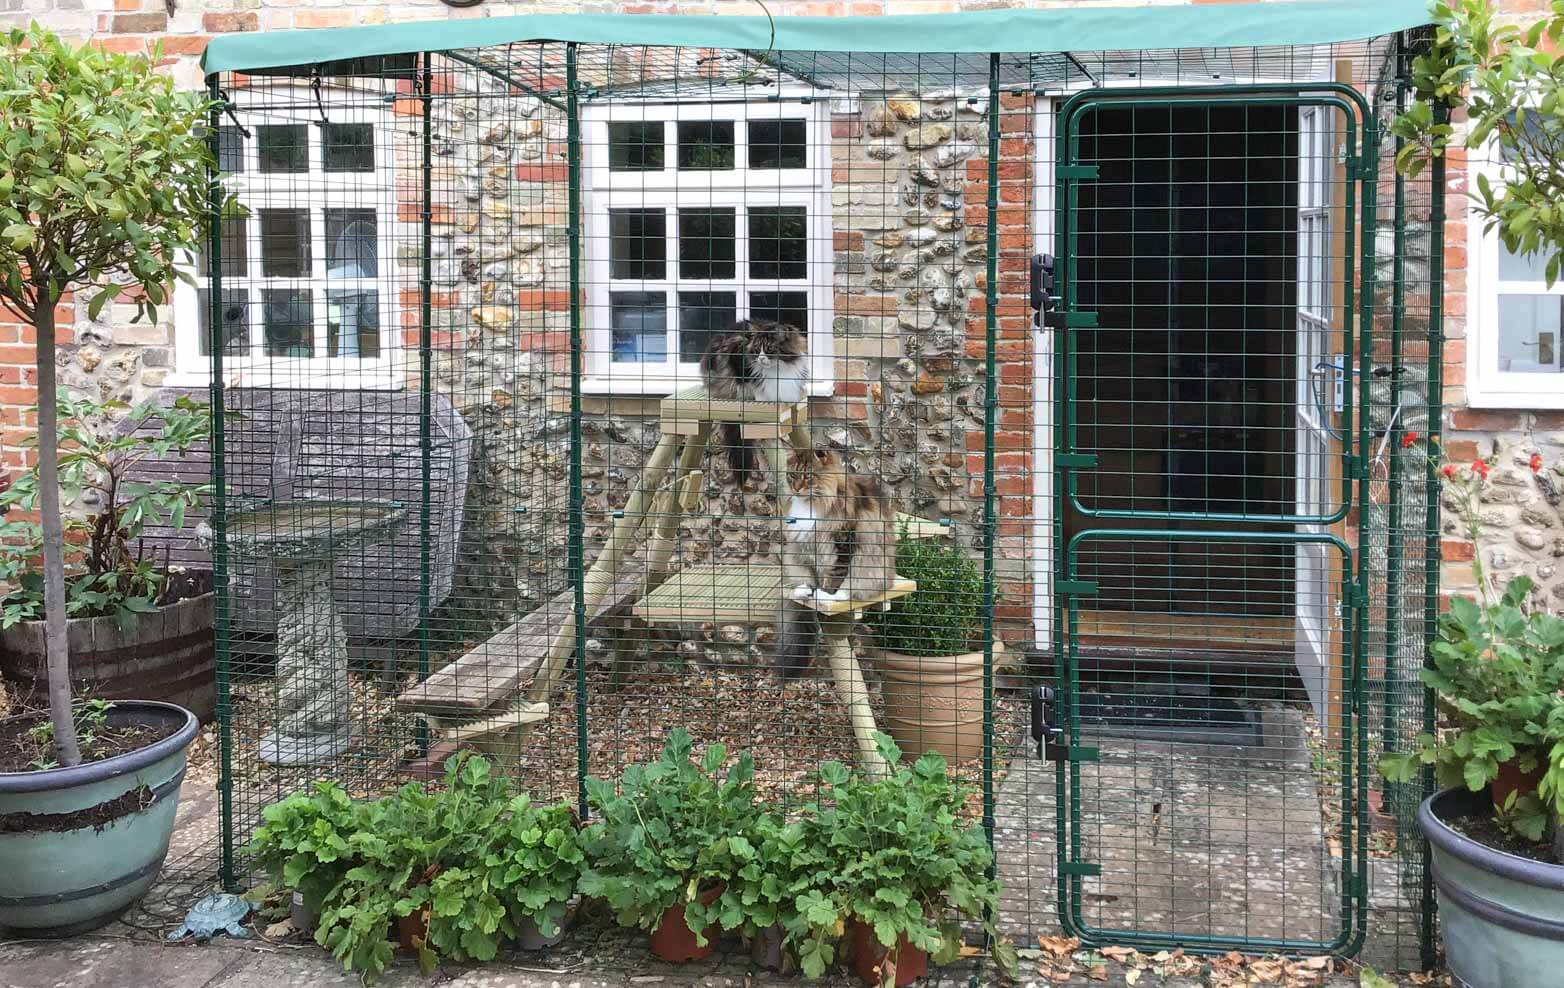 katter leker i en kattgård utomhus